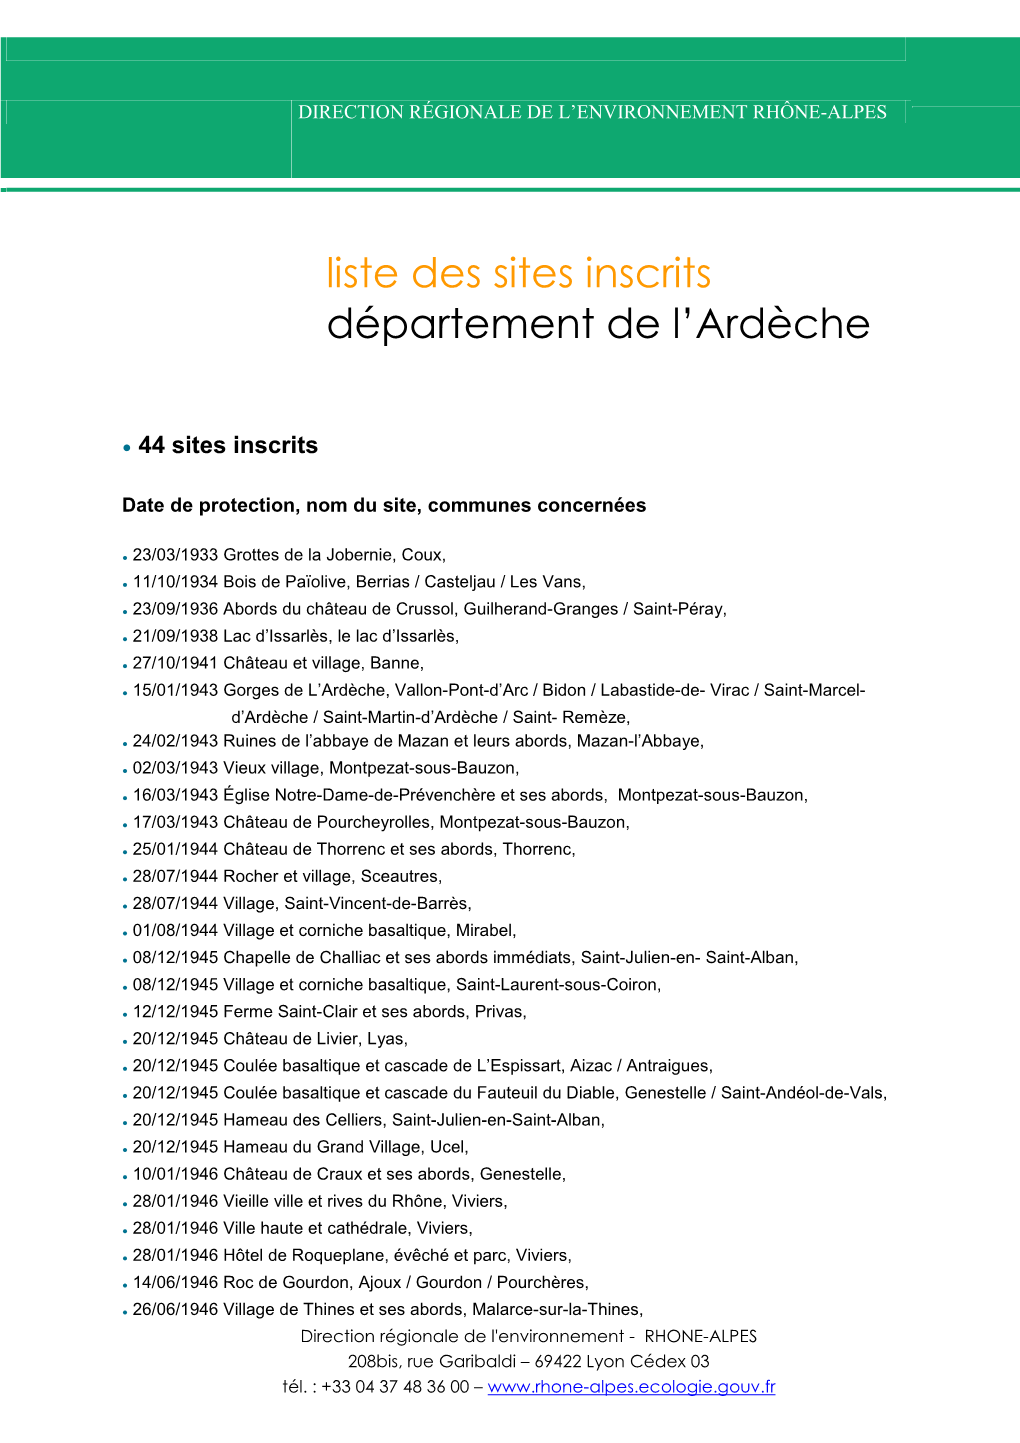 Sites Incrits Ardèche